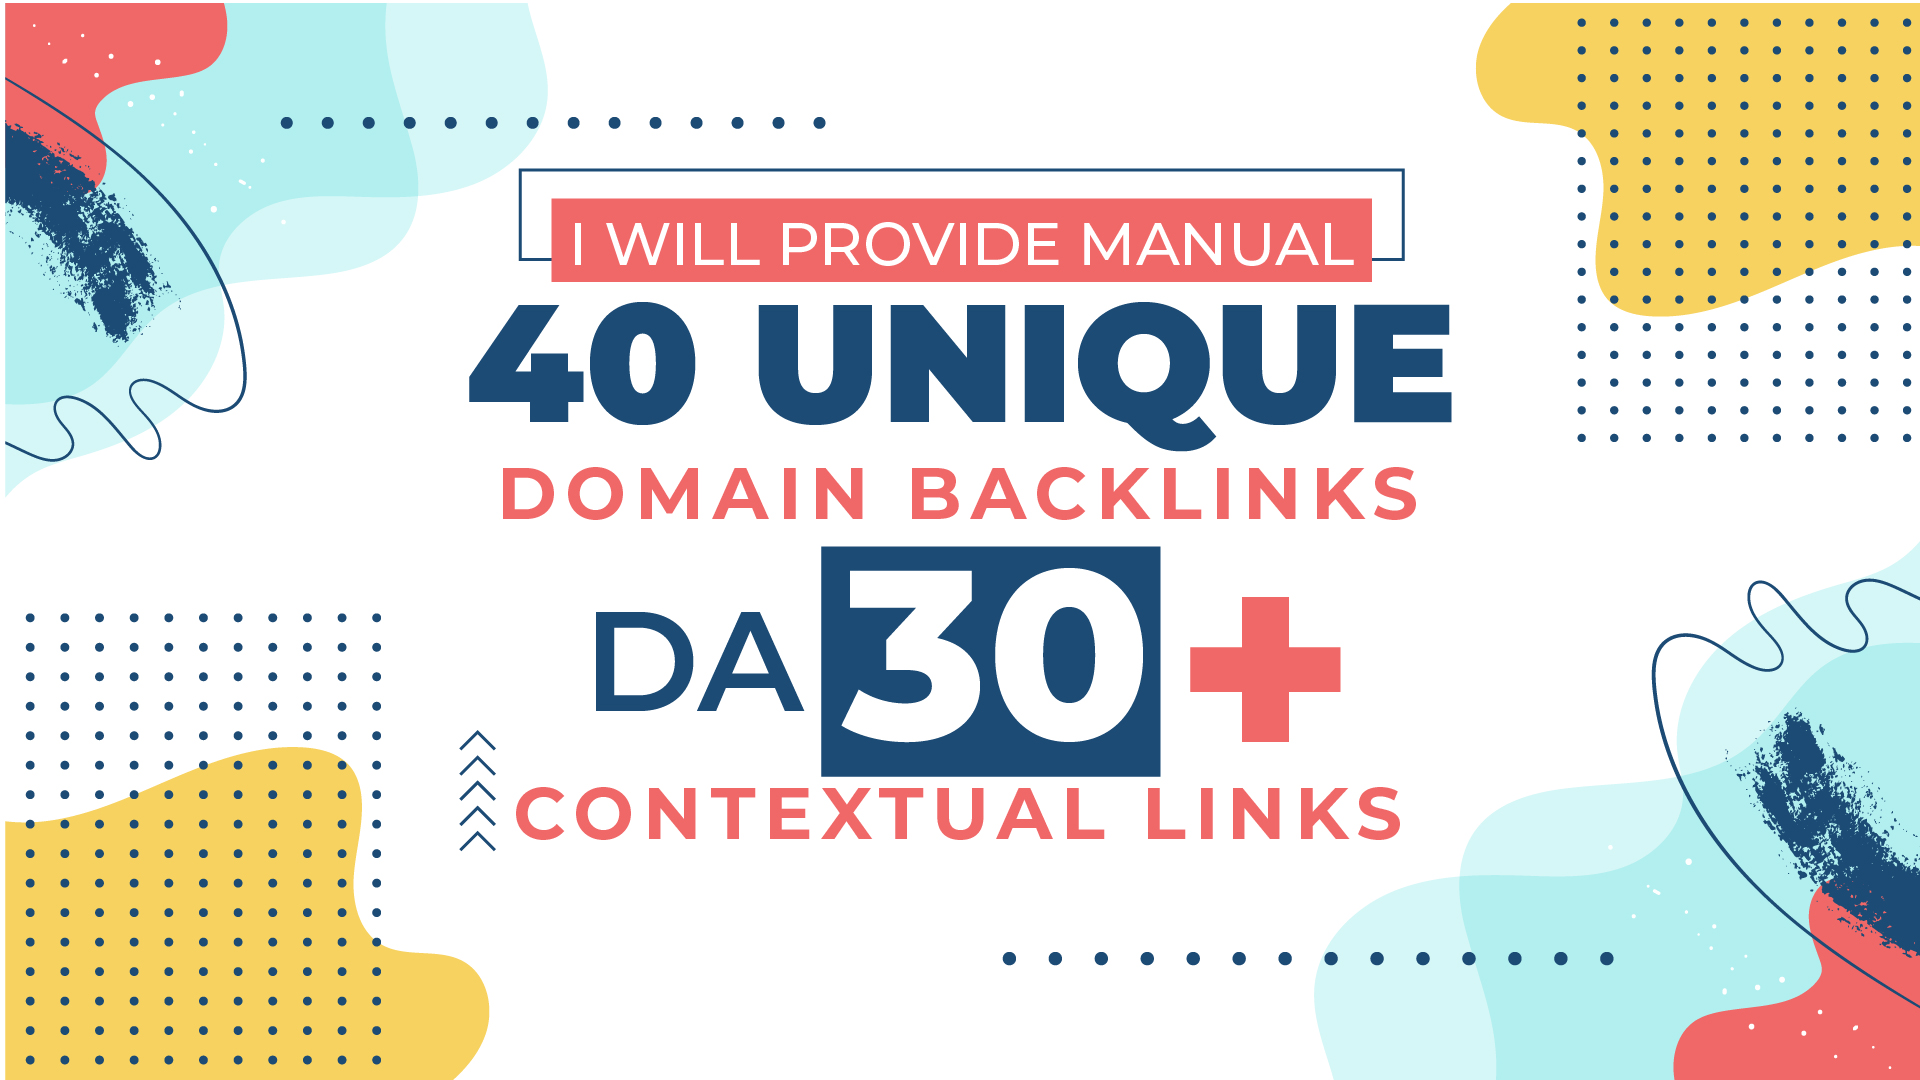 I Will provide Manual 40 unique domain backlinks DA 30 + Contextual links